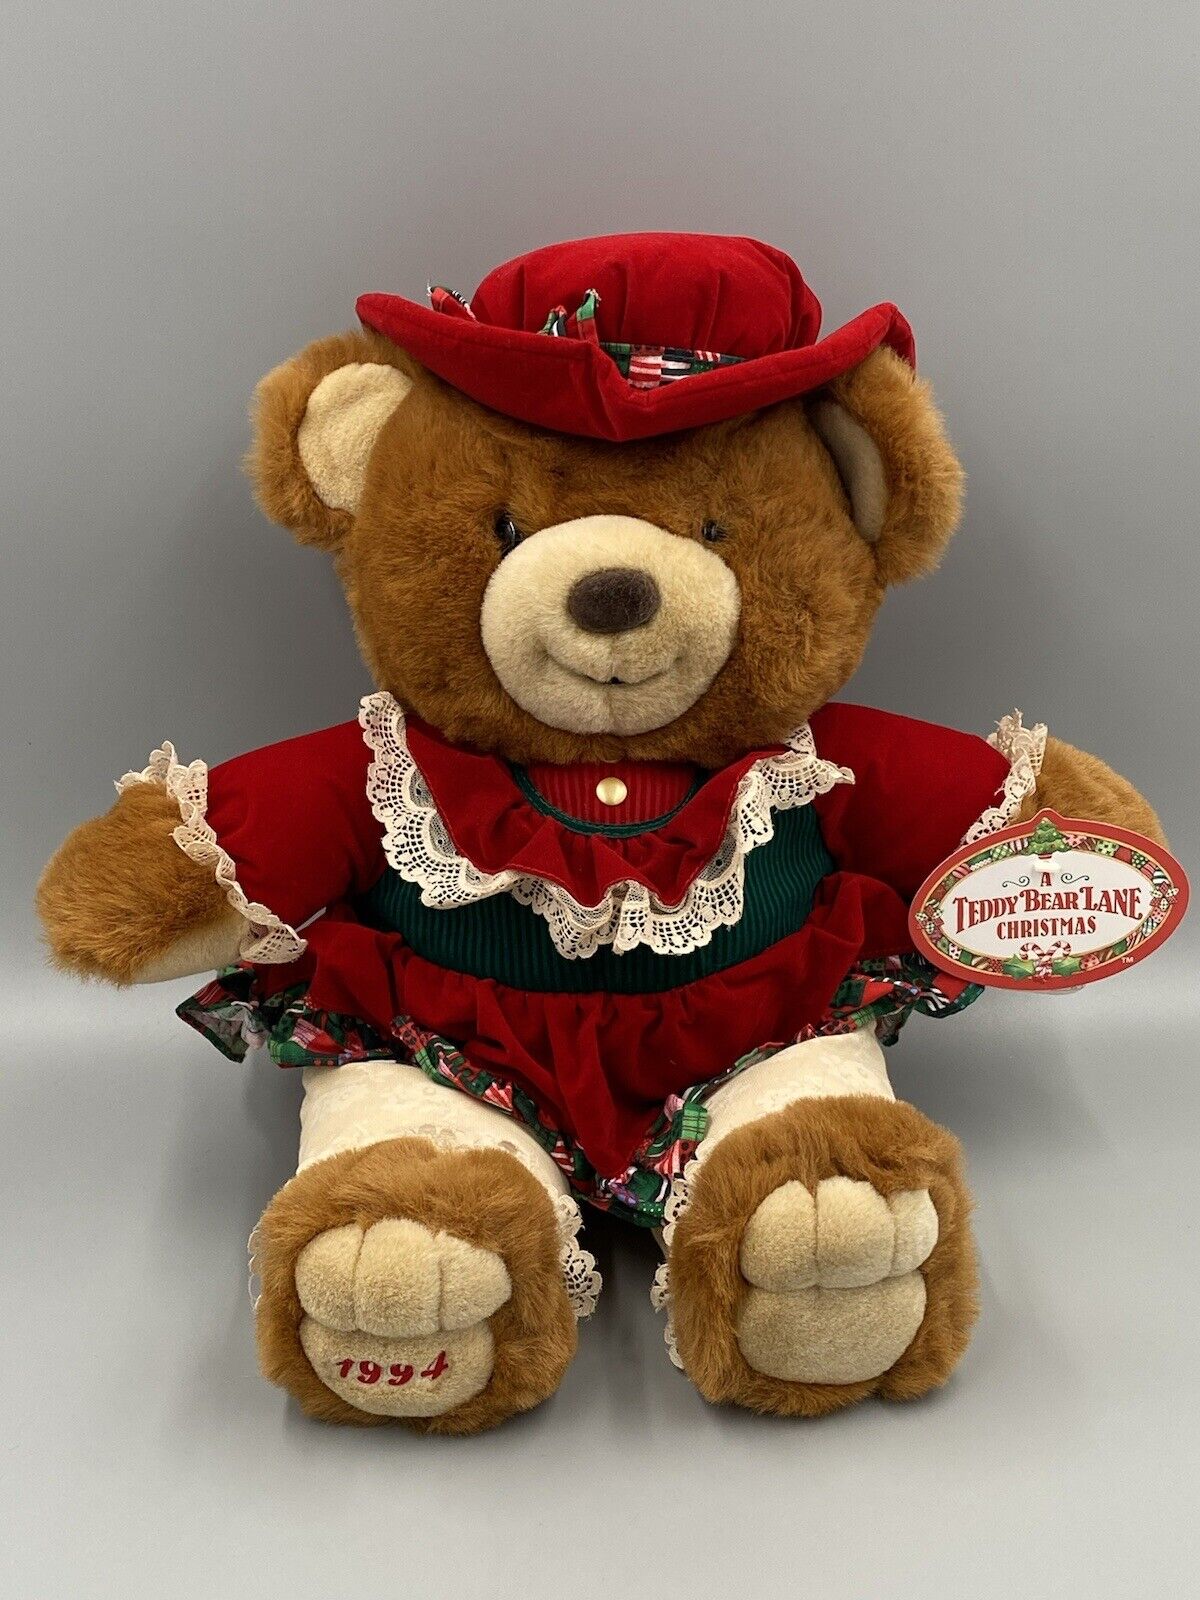 Vtg 1994 Teddy Bear Lane Christmas Bear Plush 16” Kmart Stuffed Animal Decor